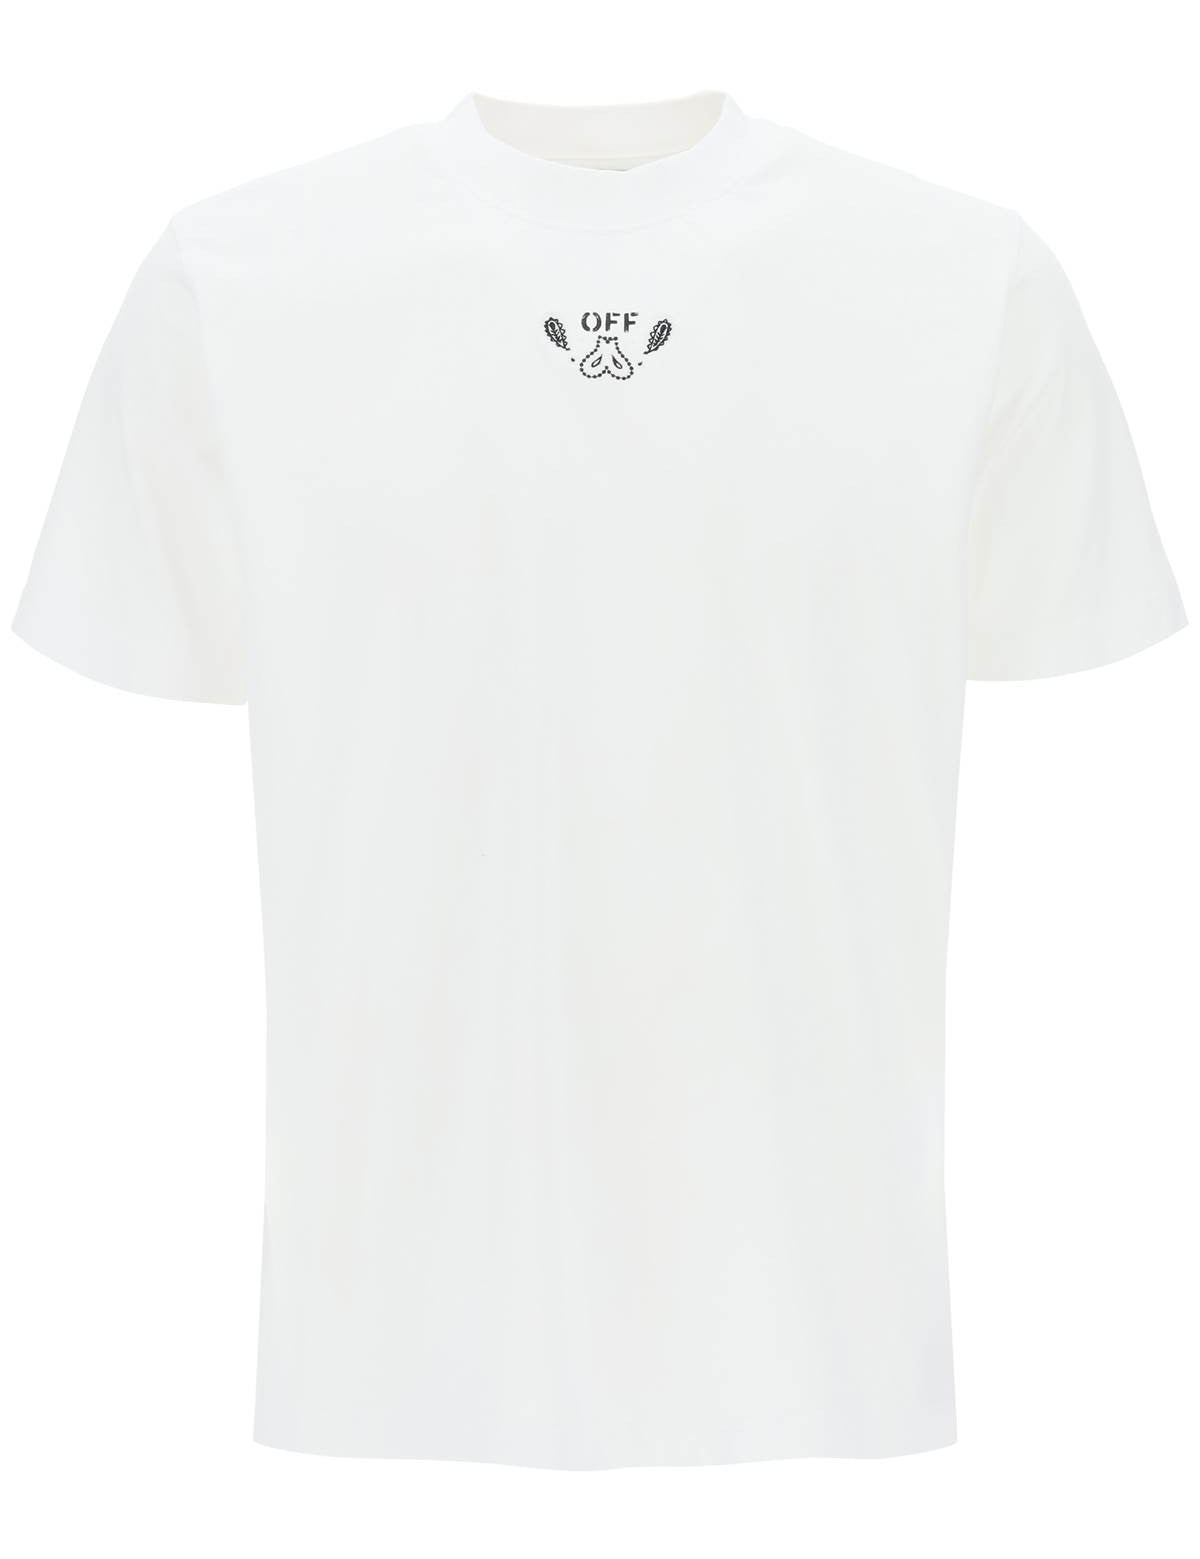 off-white-bandana-arrow-pattern-t-shirt.jpg